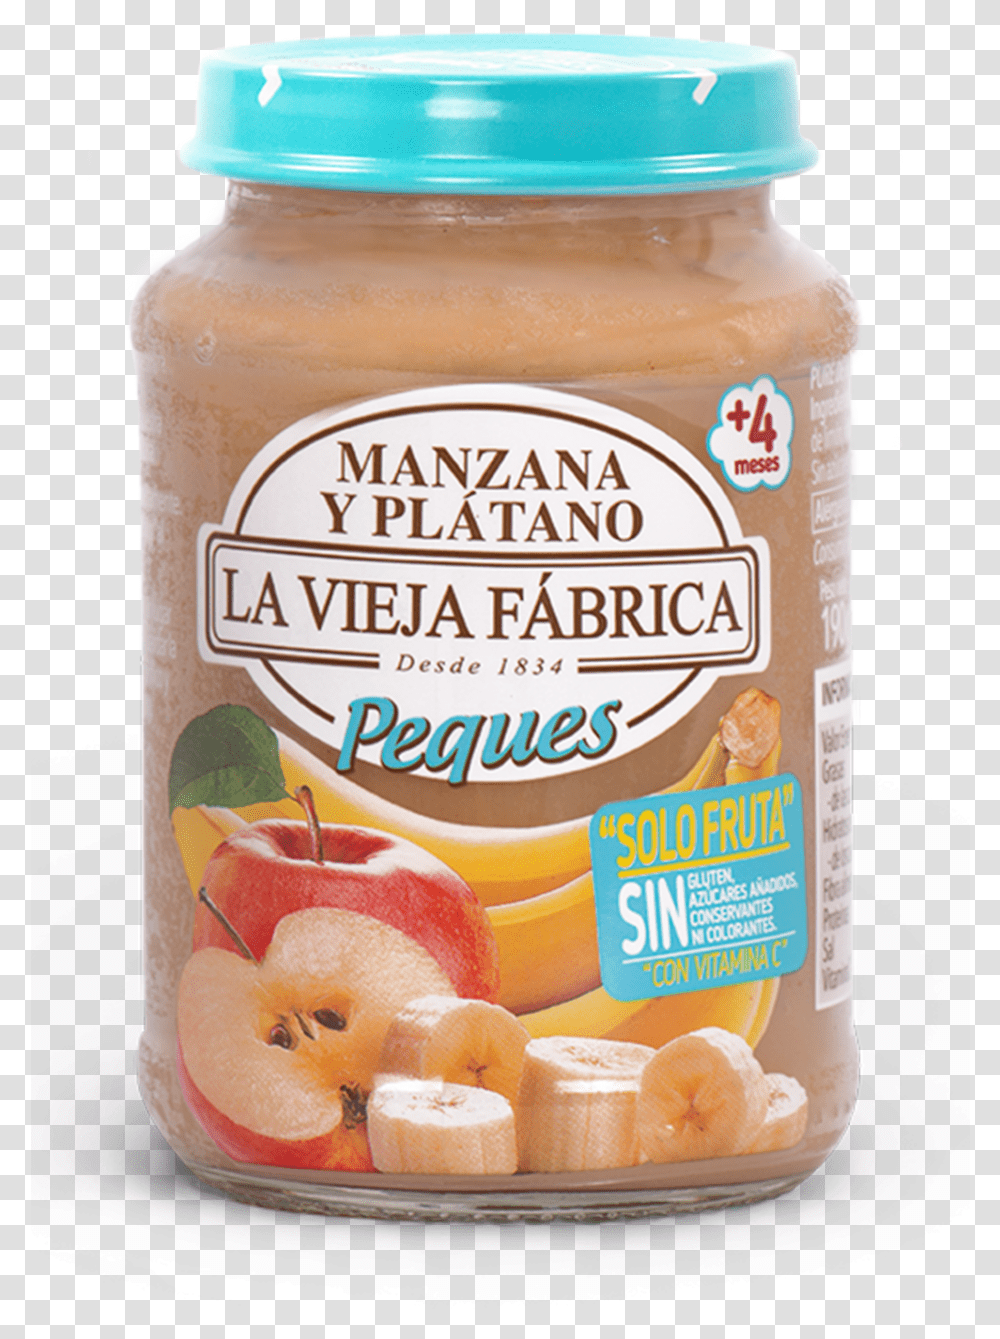 La Vieja Fabrica Pineapple Mermelada 350g Download Tangerine, Food, Plant, Ketchup, Peanut Butter Transparent Png